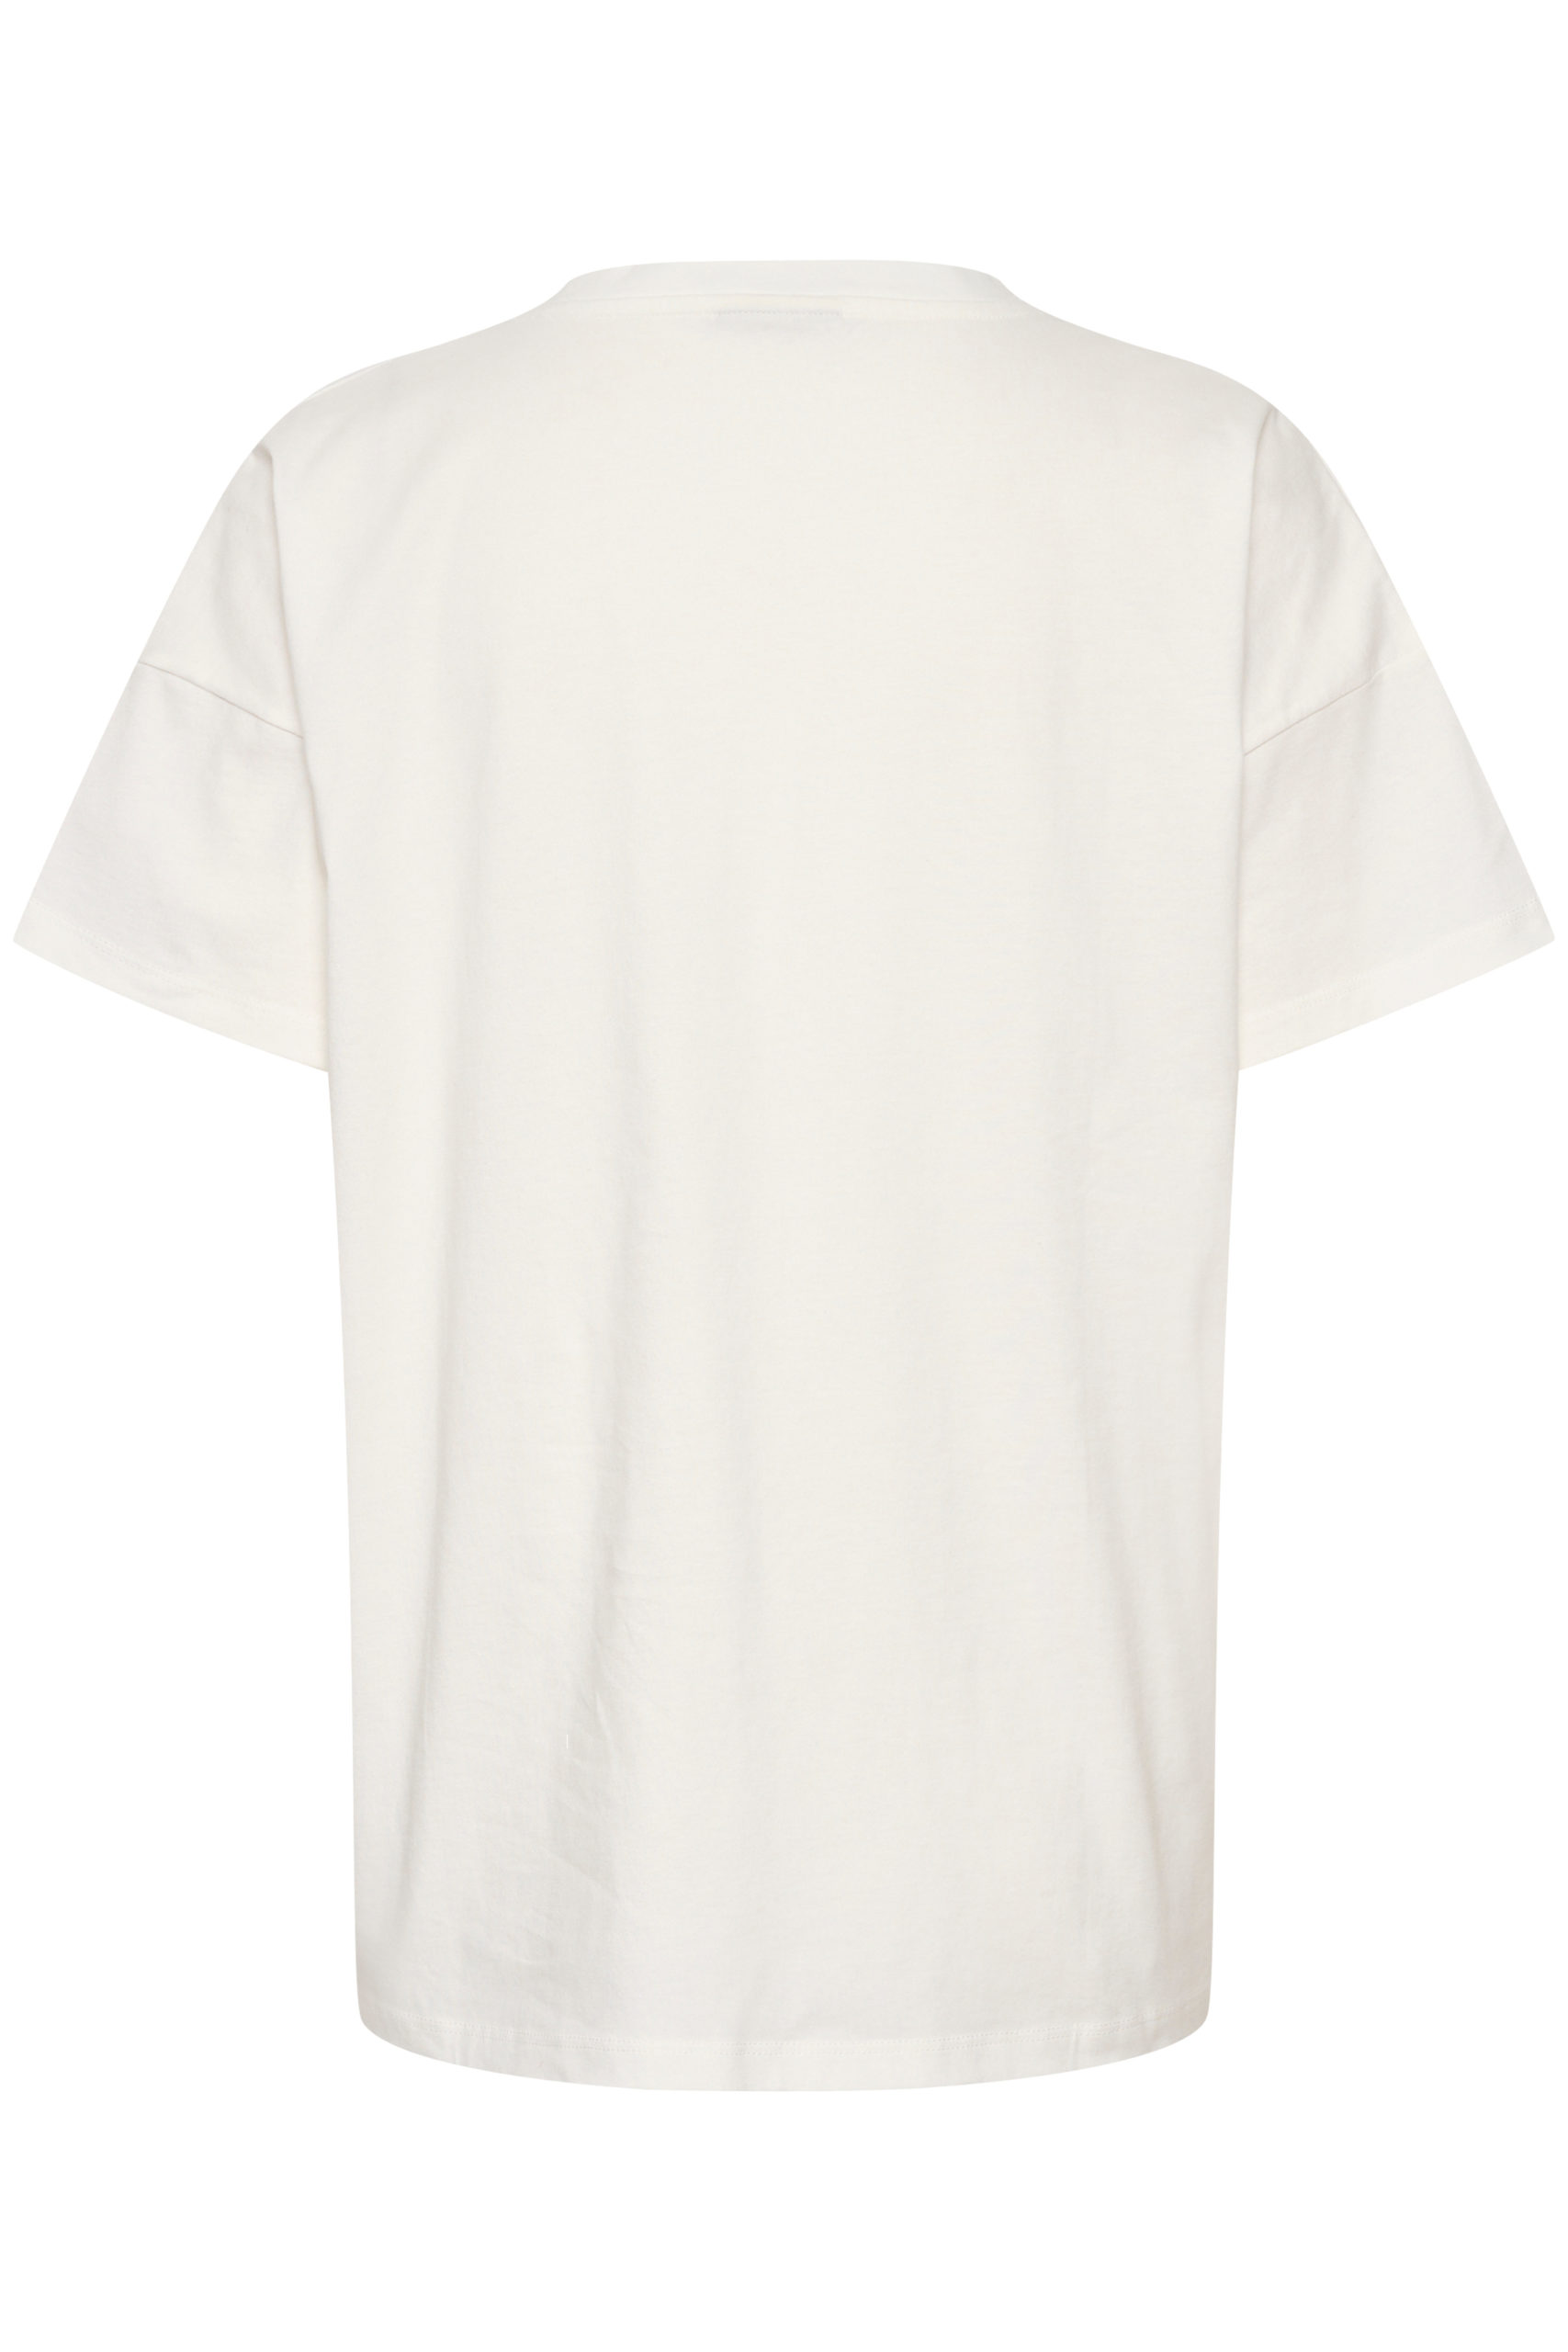 KAnelli T-Shirt white item back